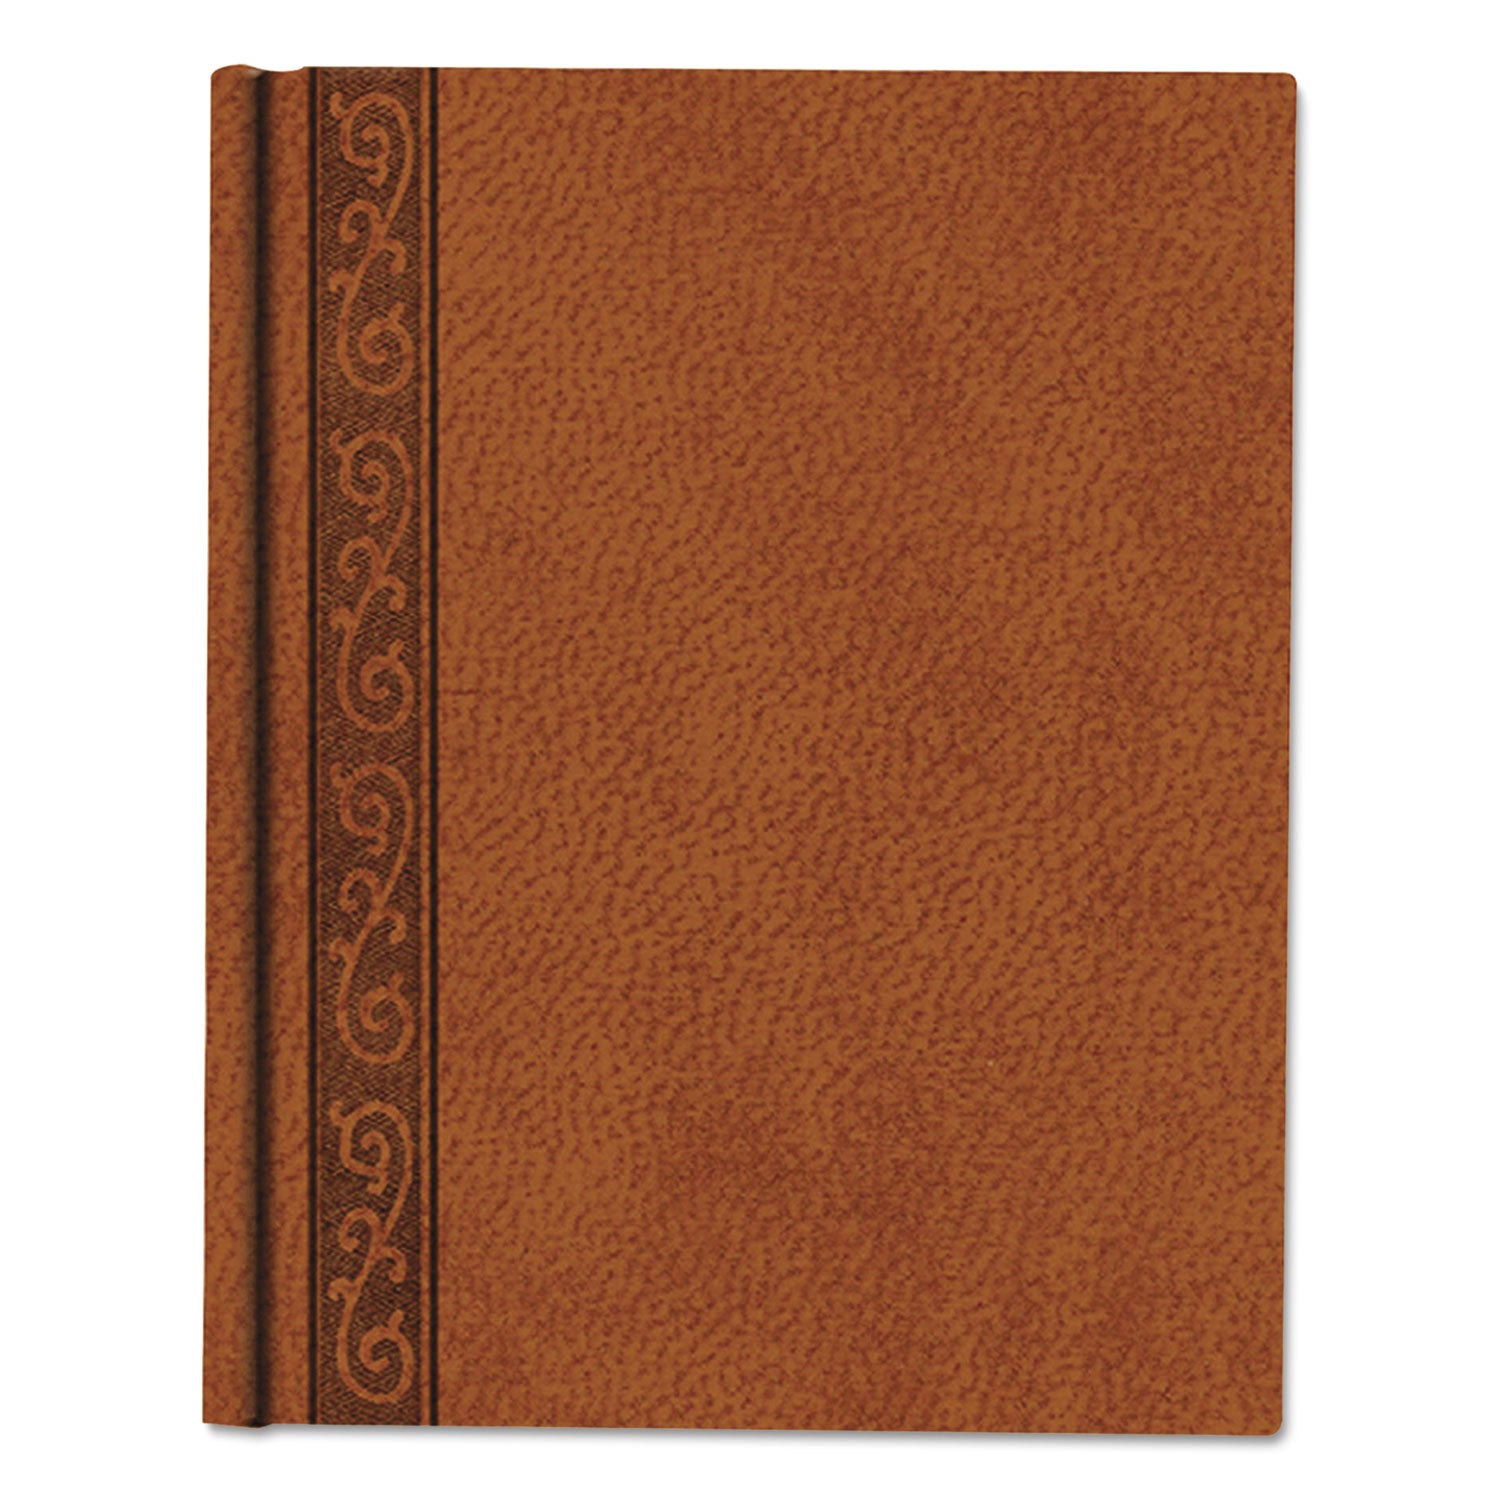 Da Vinci Notebook, 1-Subject, Medium/College Rule, Tan Cover, (75) 11 x 8.5 Sheets - 